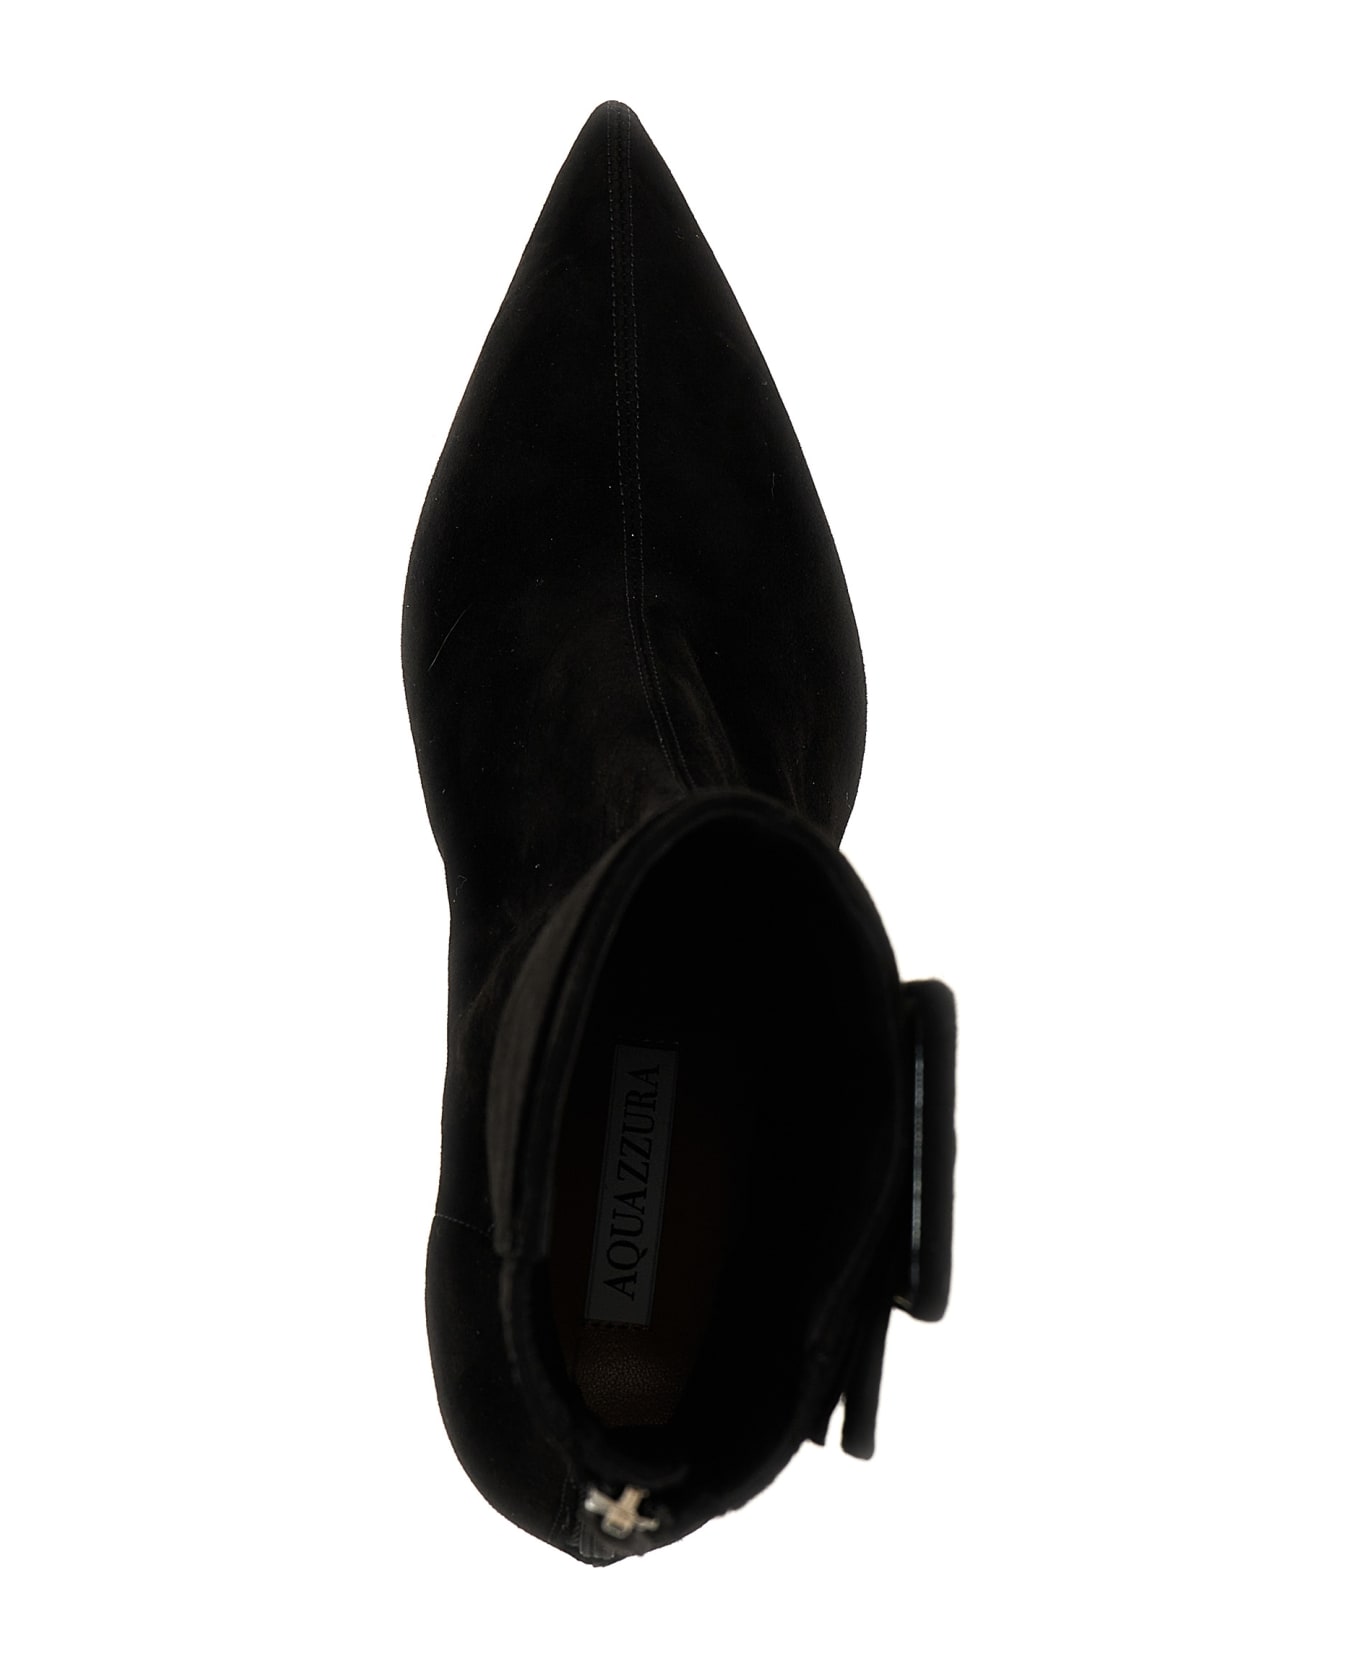 Aquazzura 'st. Honoré' Ankle Boots - Black   ブーツ